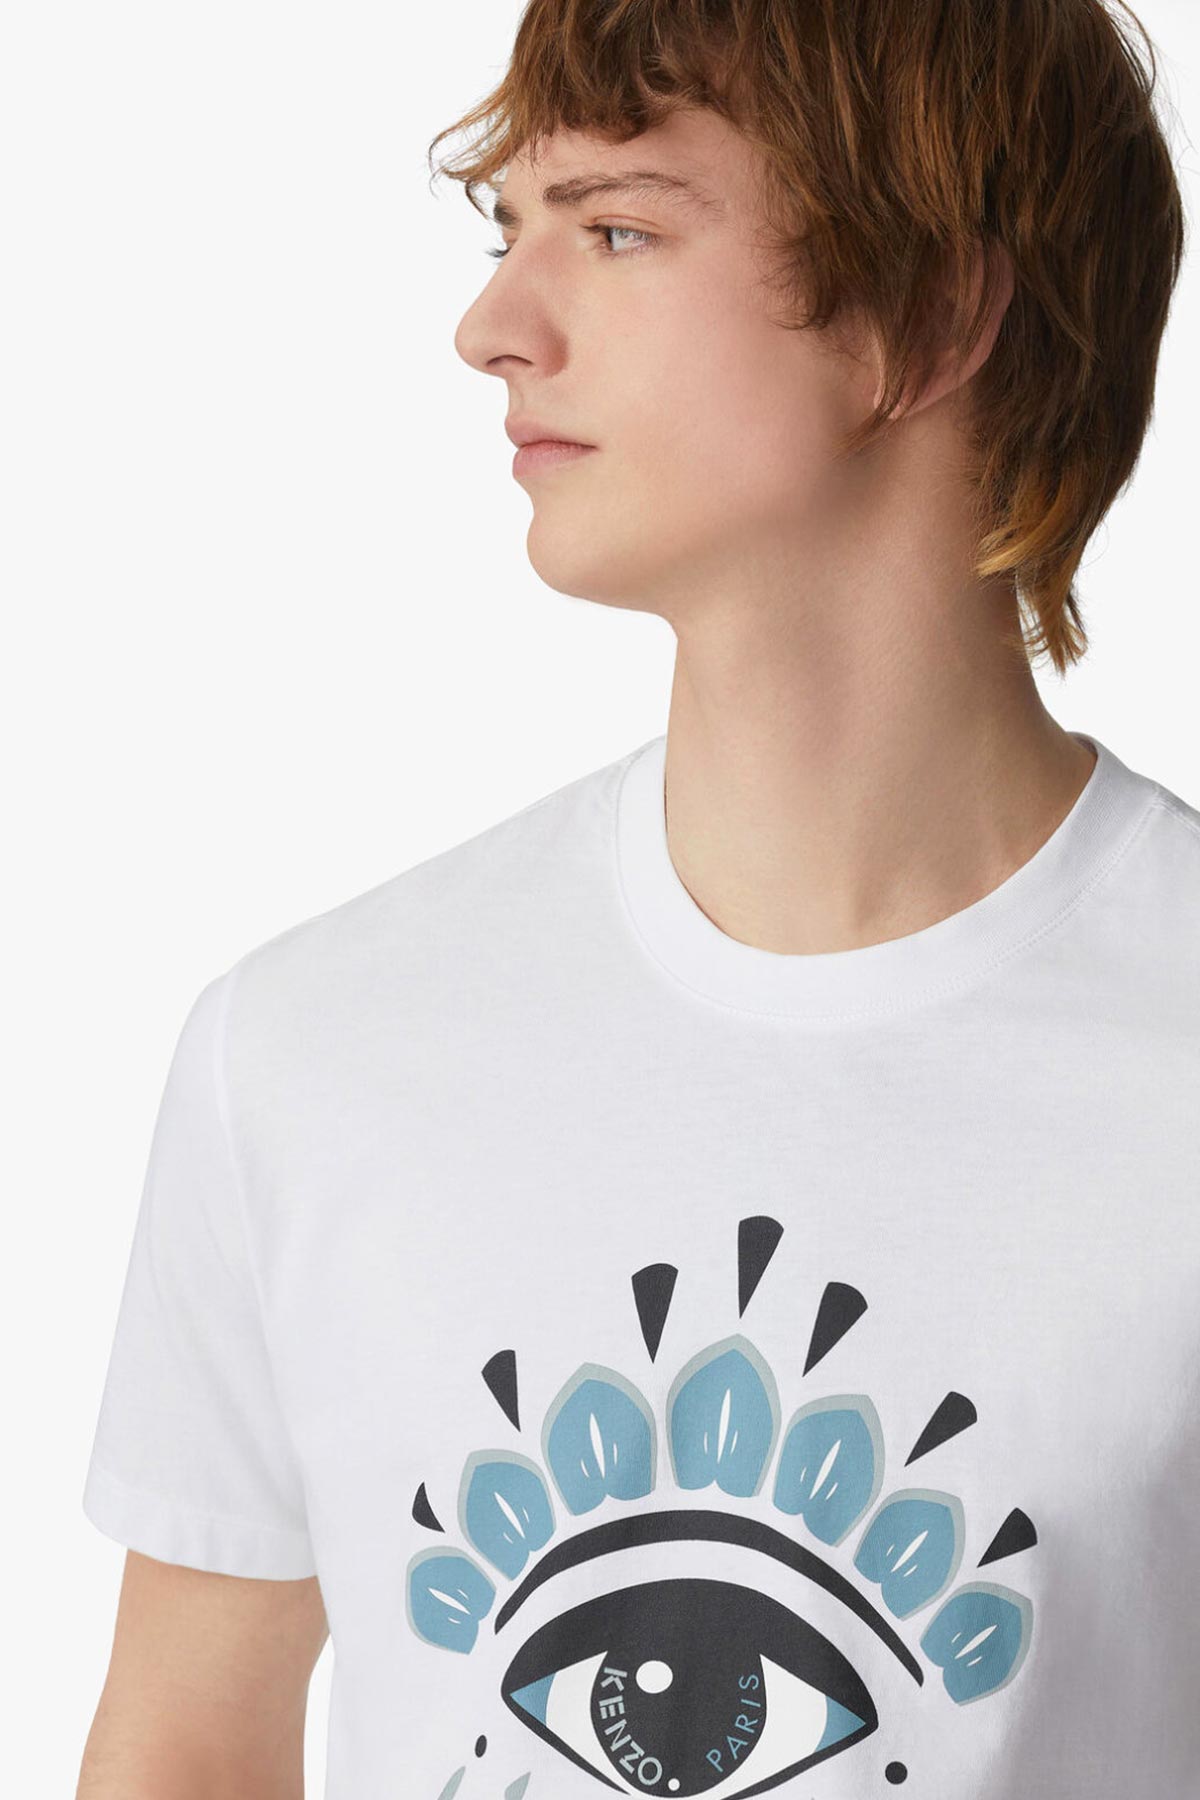 Kenzo Göz T-shirt-Libas Trendy Fashion Store